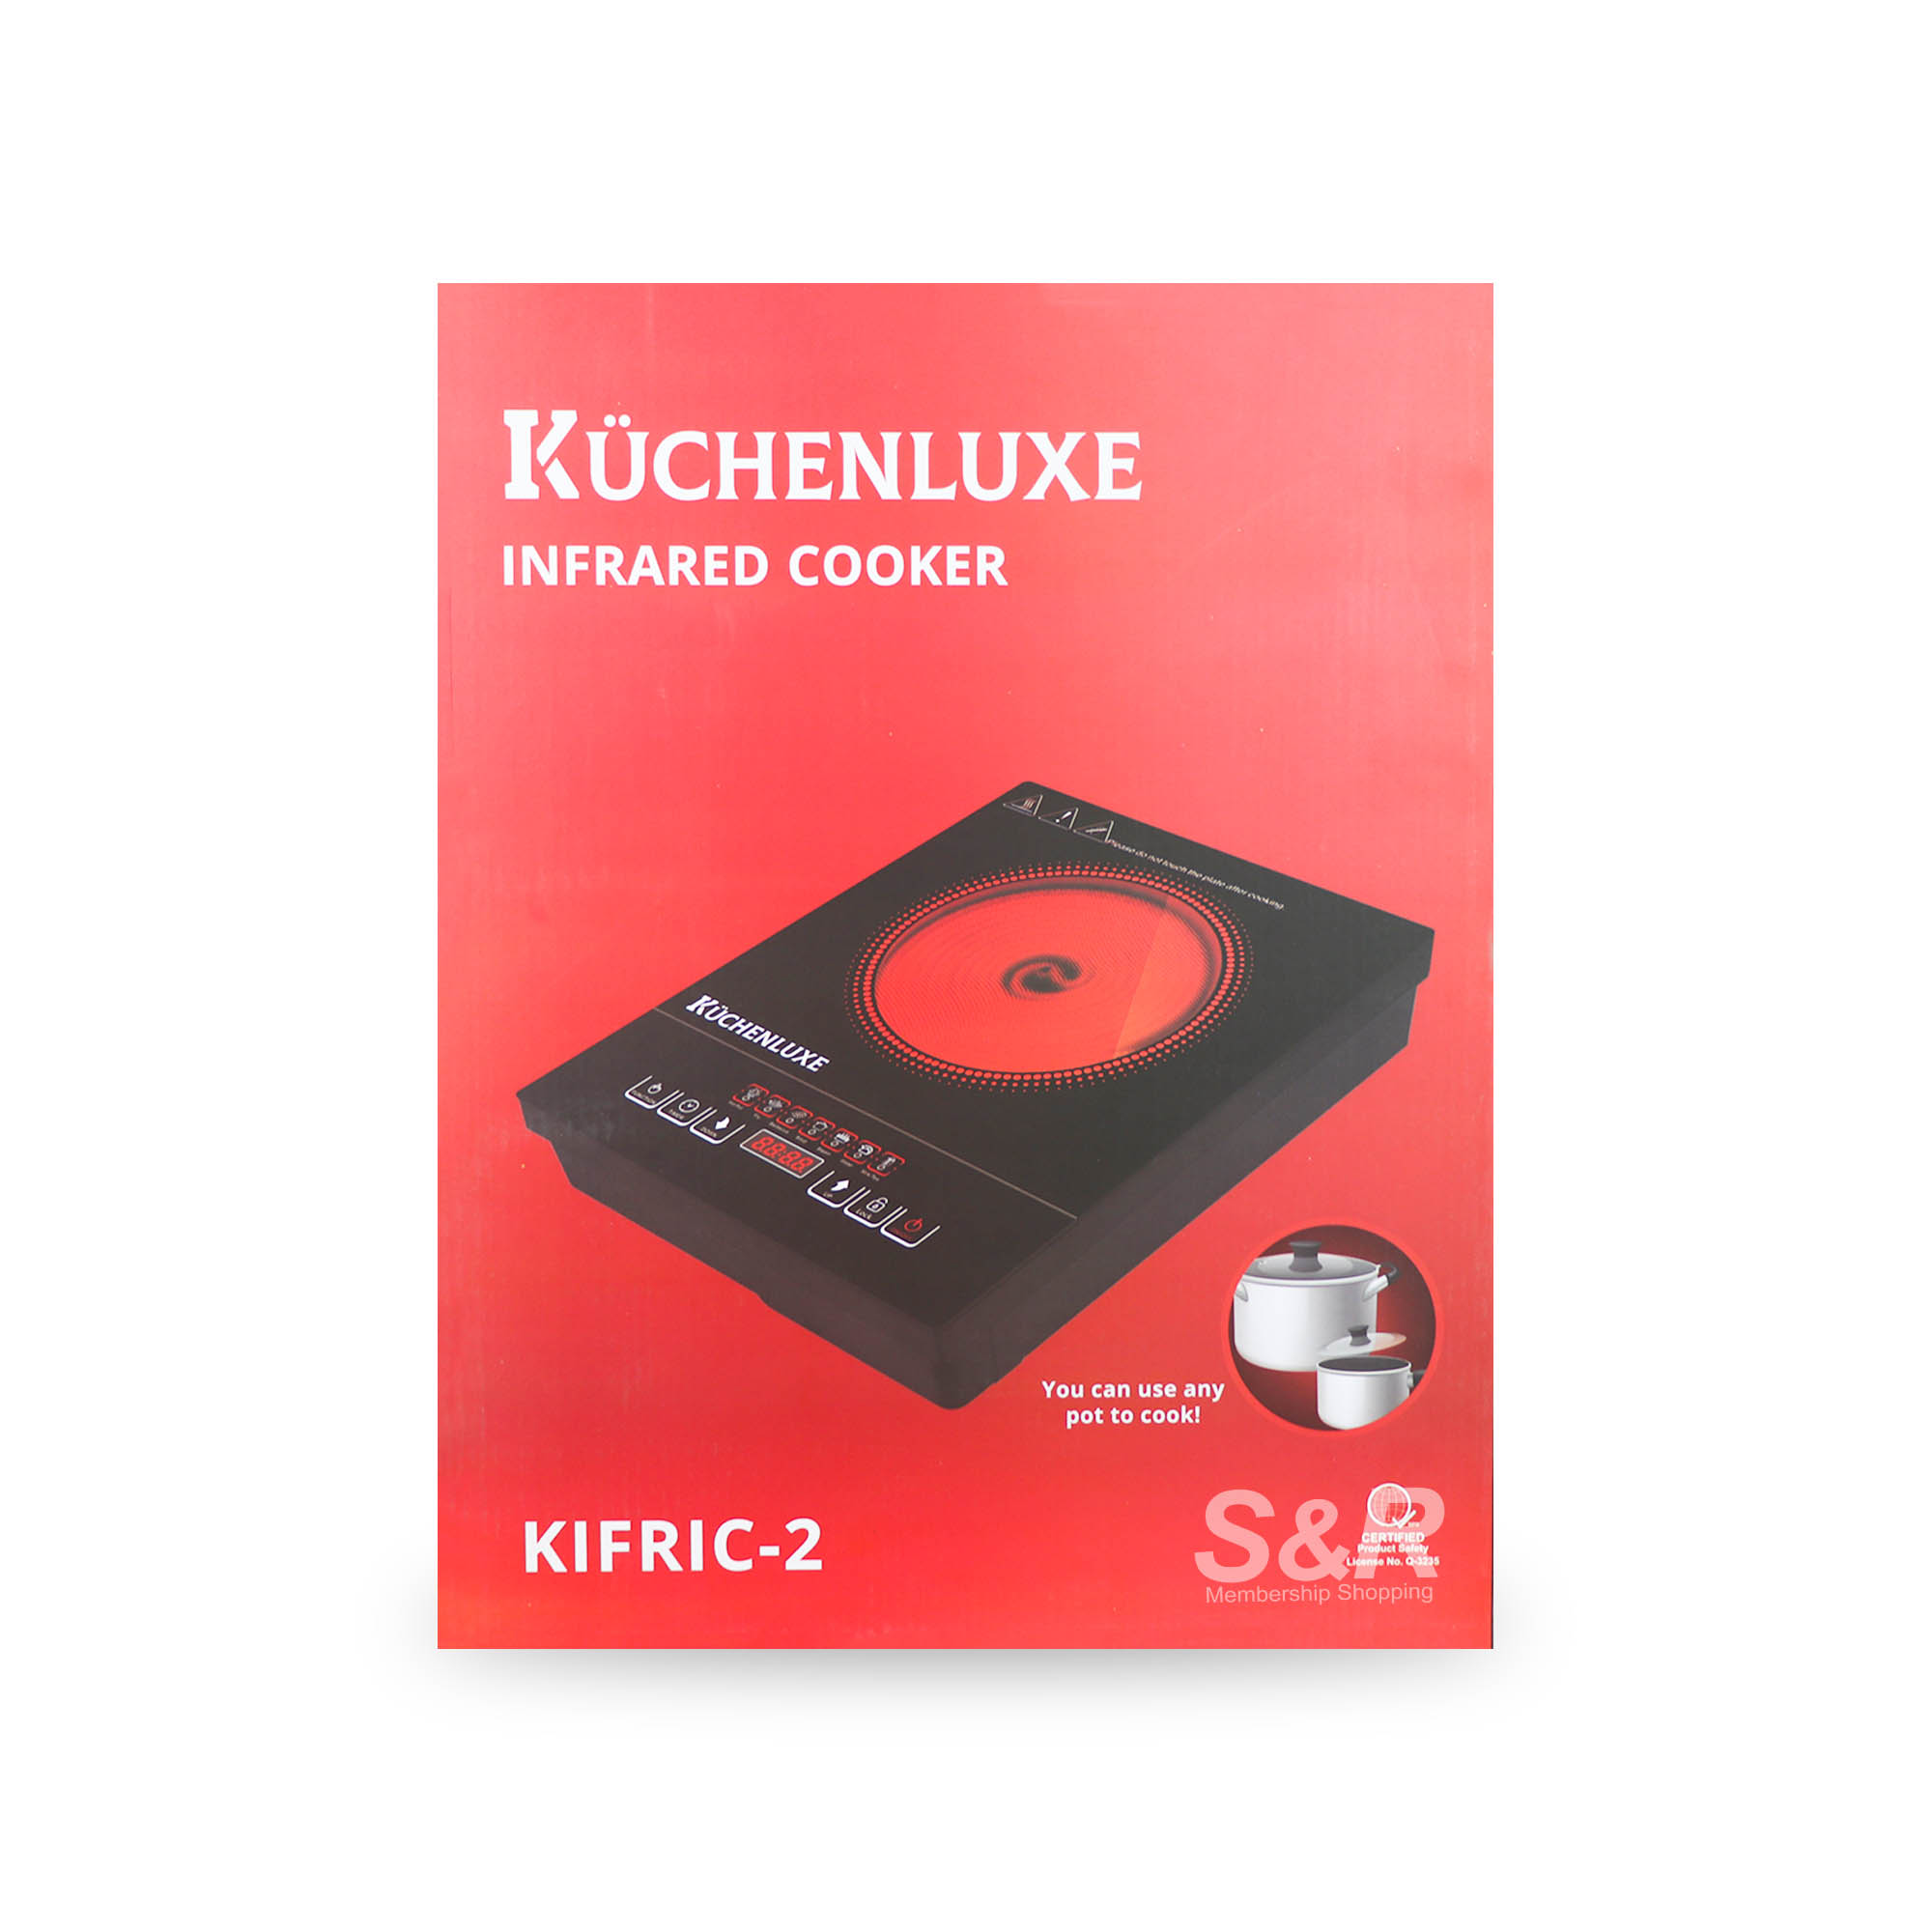 Kuchenluxe Infrared Cooker KIFRIC-2 1pc